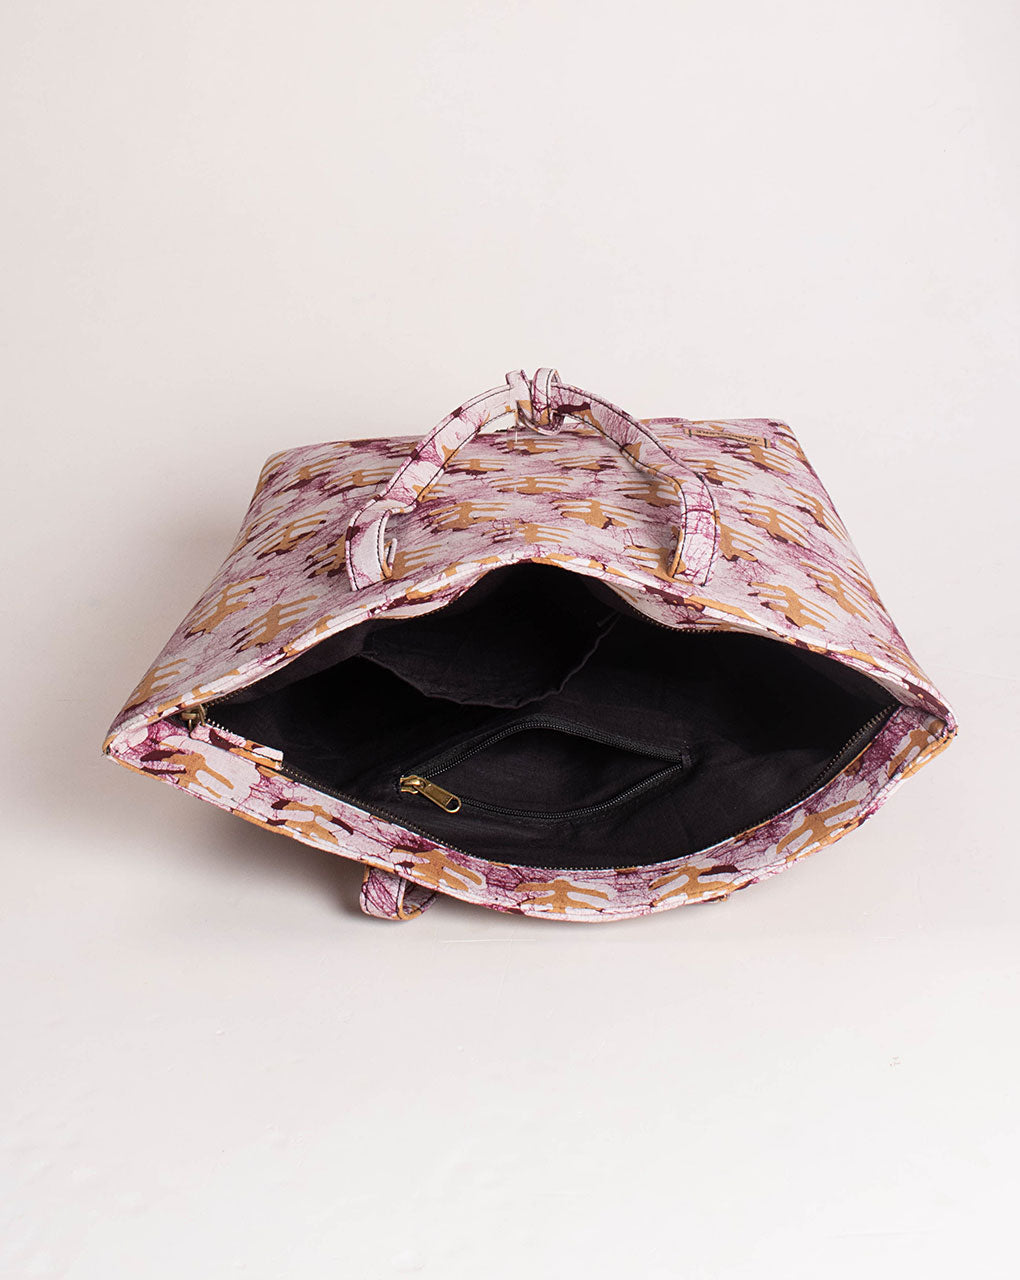 Upcycled Floral Batik Bags ( Set Of 4 ) - Fabriclore.com